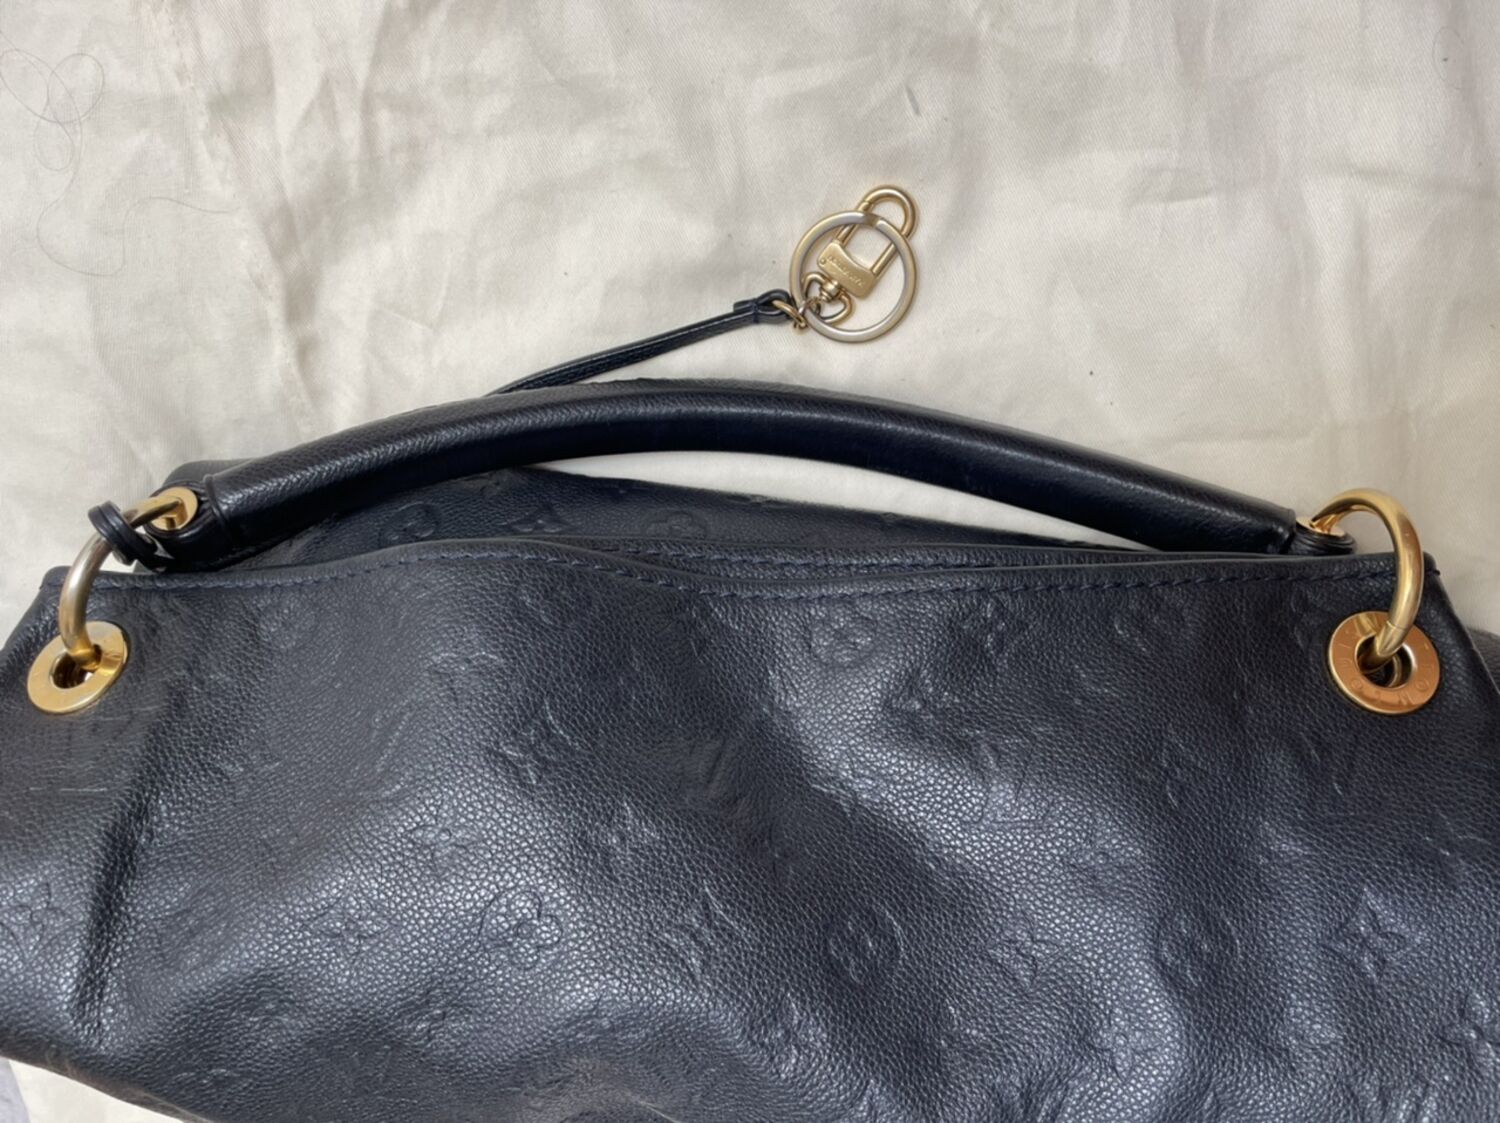 Louis Vuitton Artsy MM Empreinte Monogram Shoulder Bag Noir Black-US